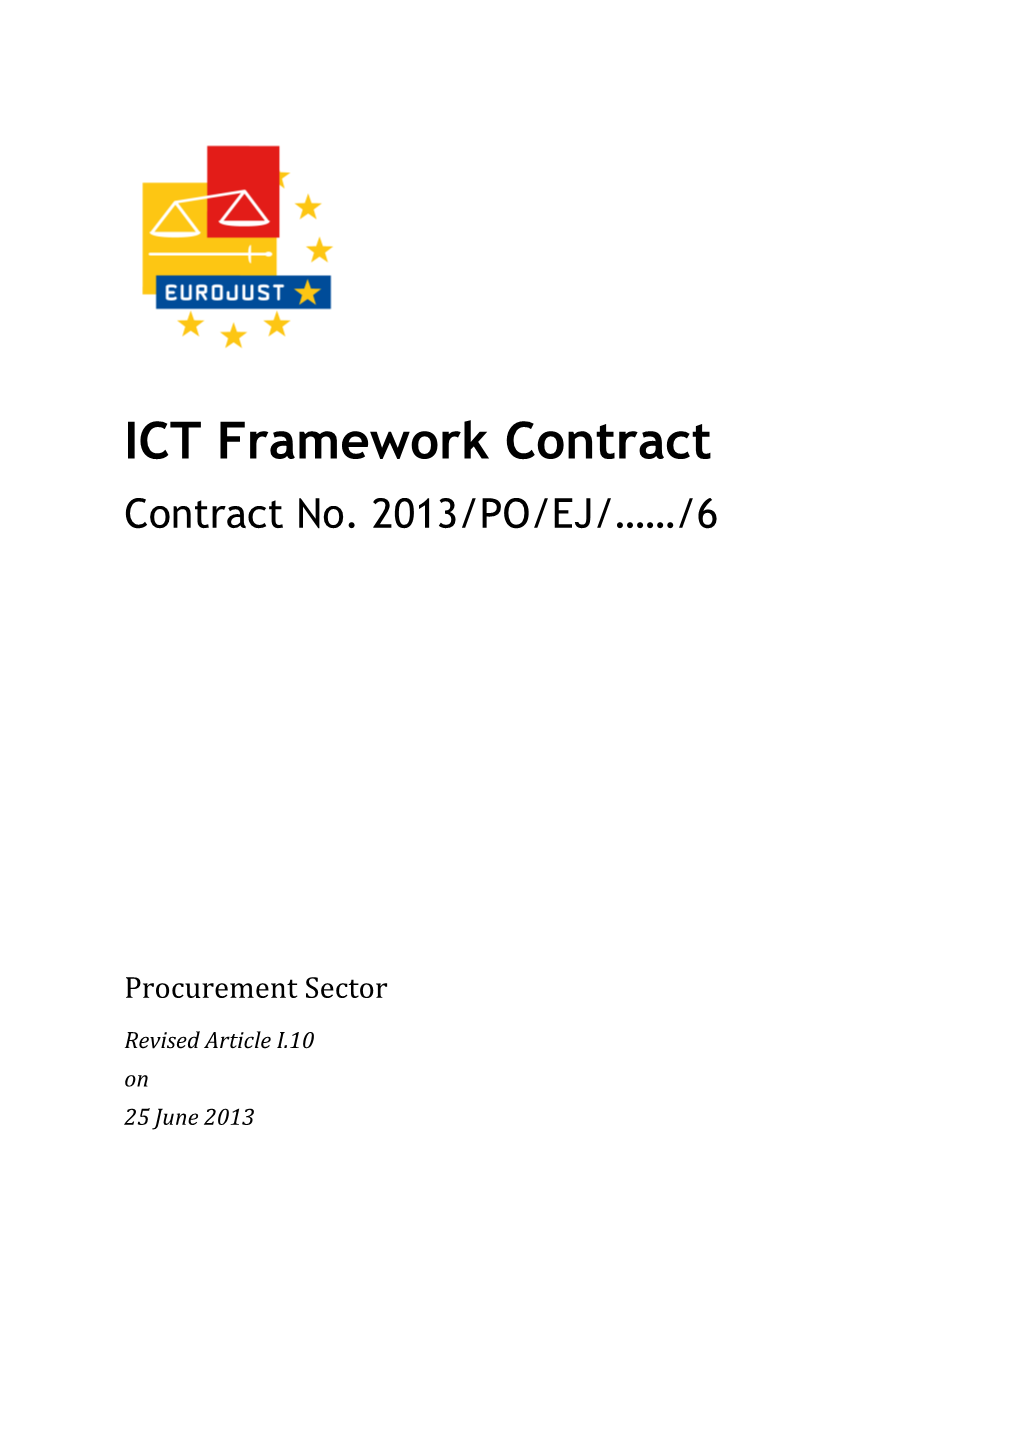 Annex D - ICT Framework Contract